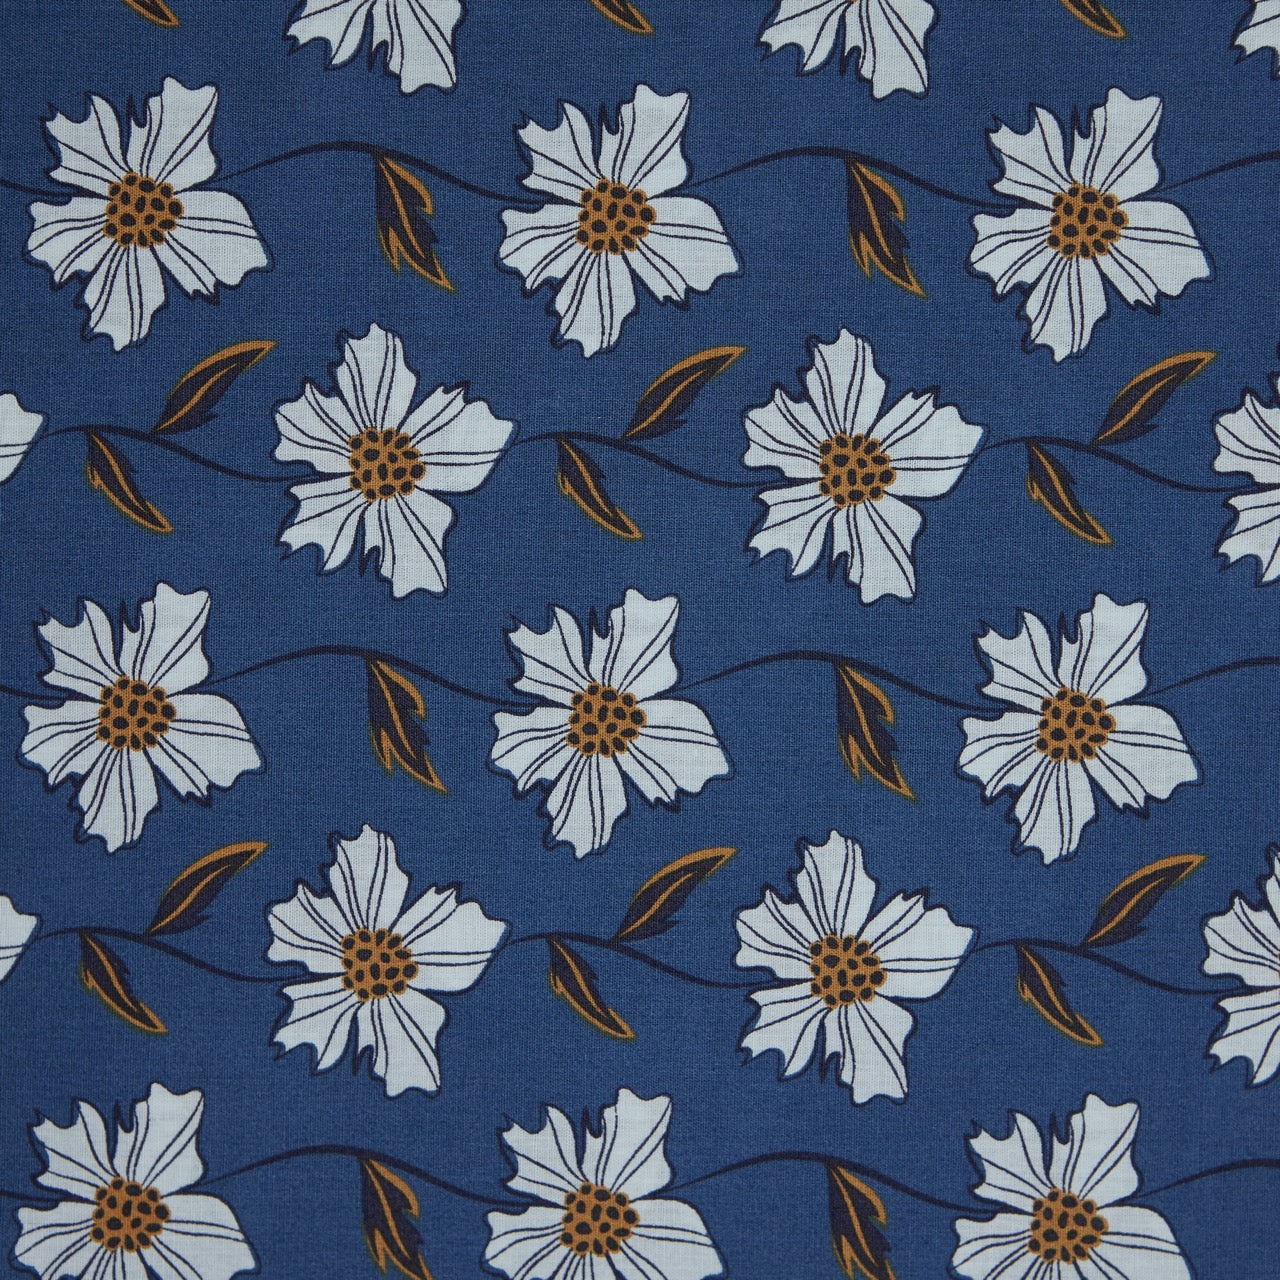 Cotton Floral - Daisy Chain - Blue (detail)